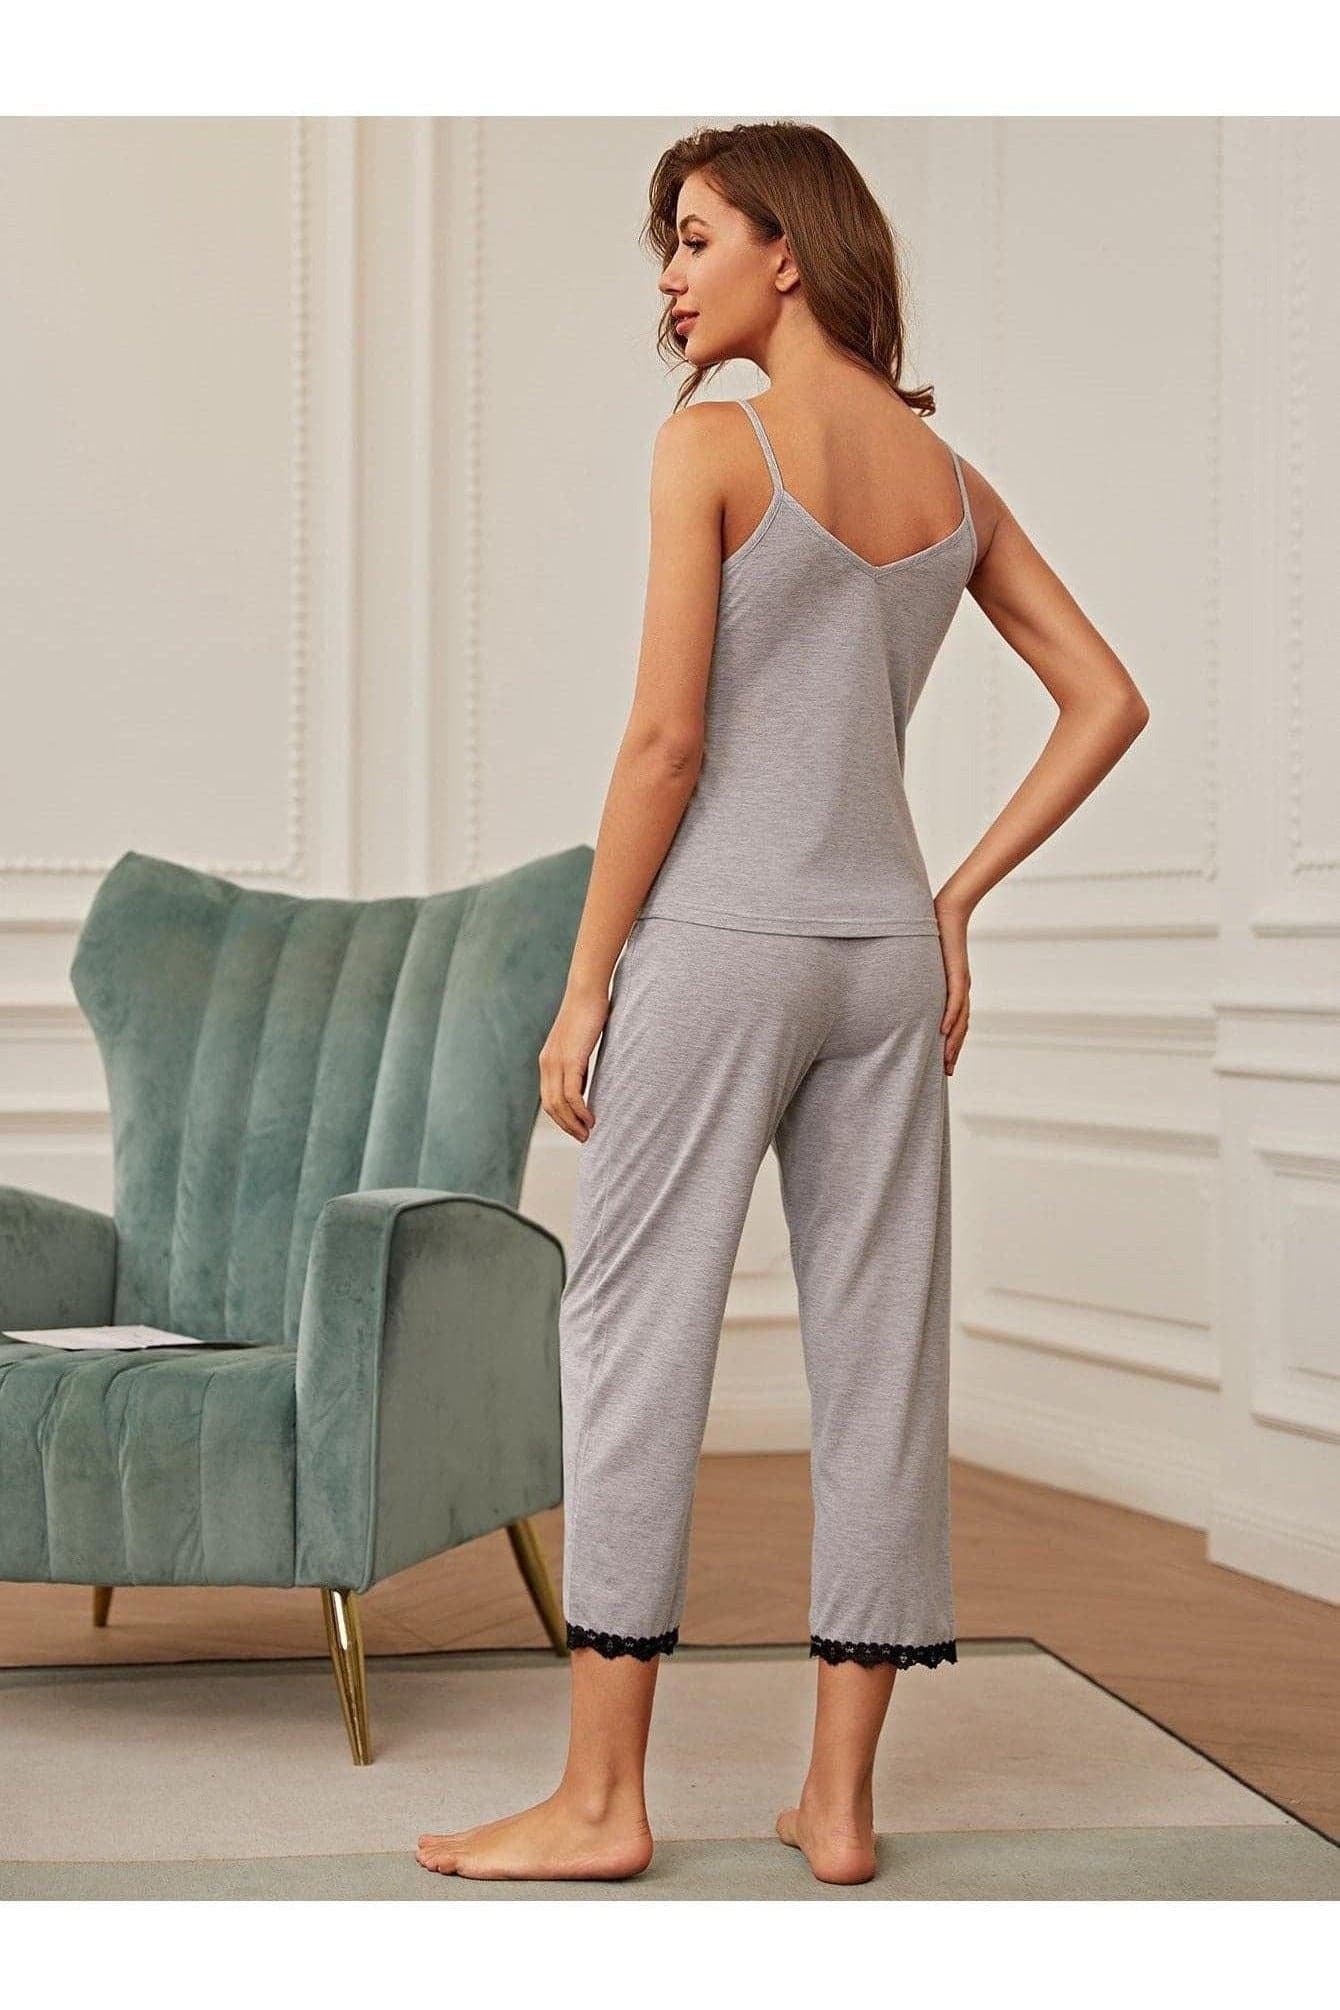 Alex V-Neck Lace Trim Slit Cami and Pants Pajama Set - SwagglyLife Home & Fashion